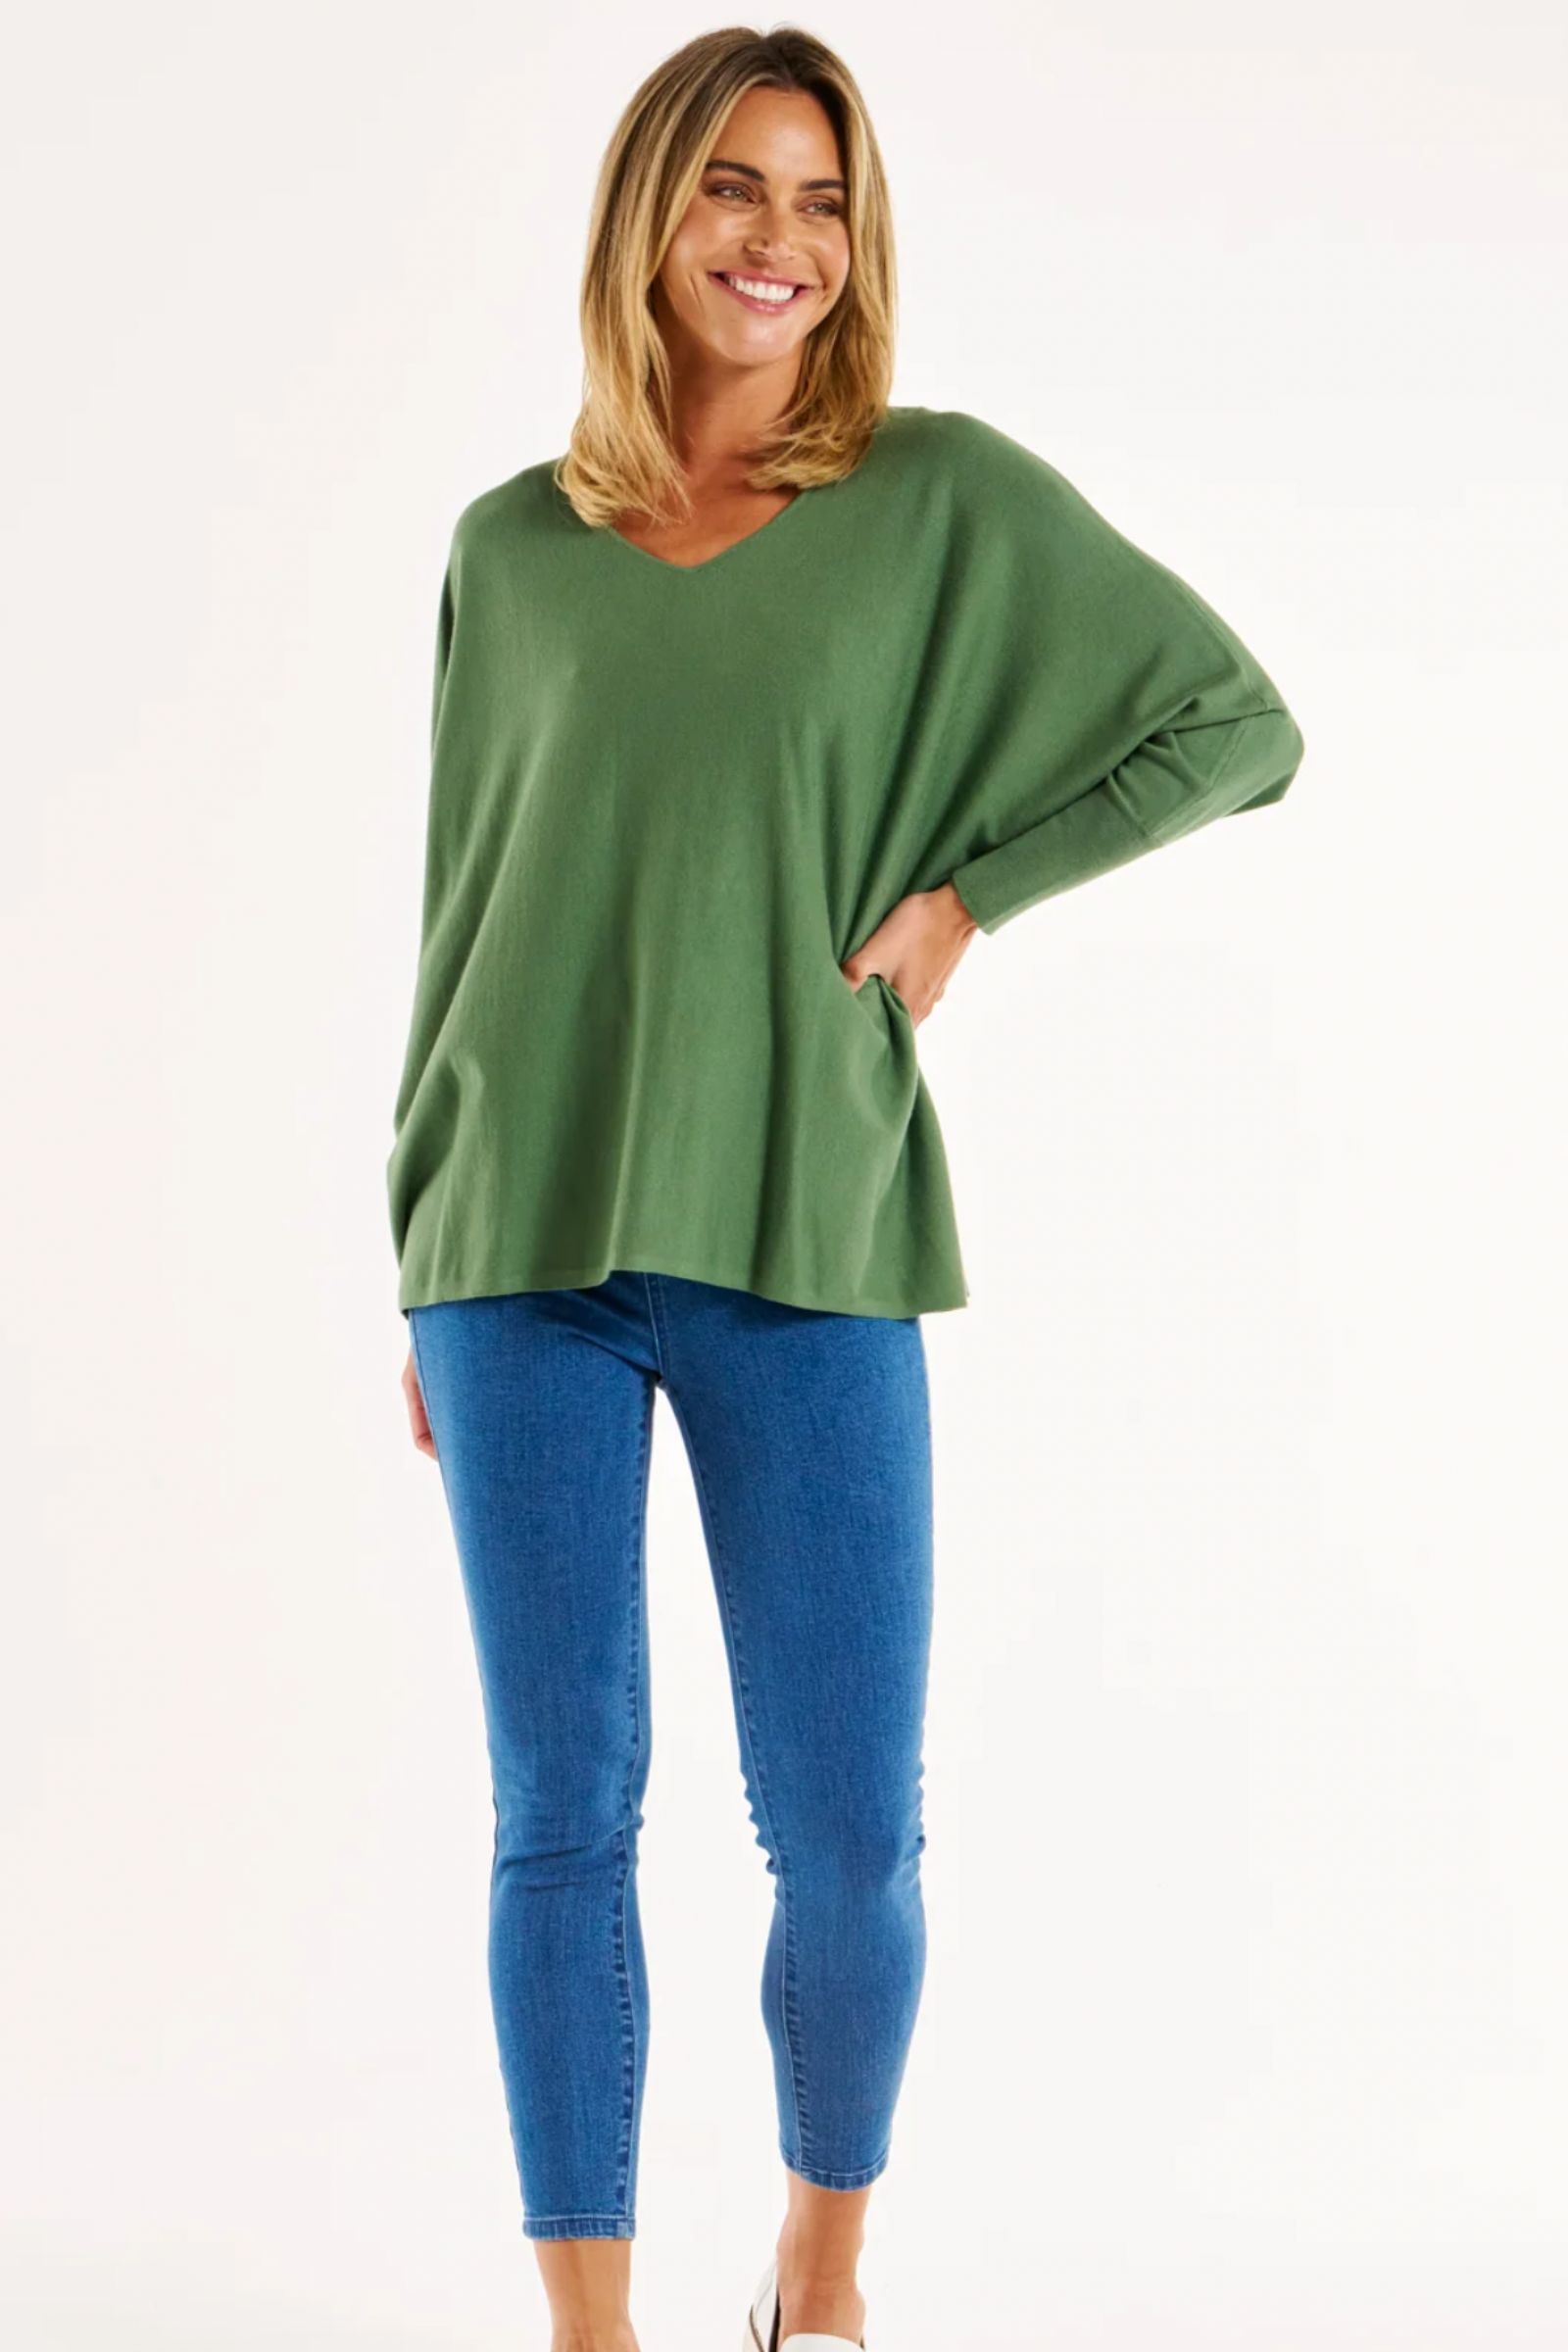 Betty Basics Destiny Knit Jumper Powder Green - Re Ordered